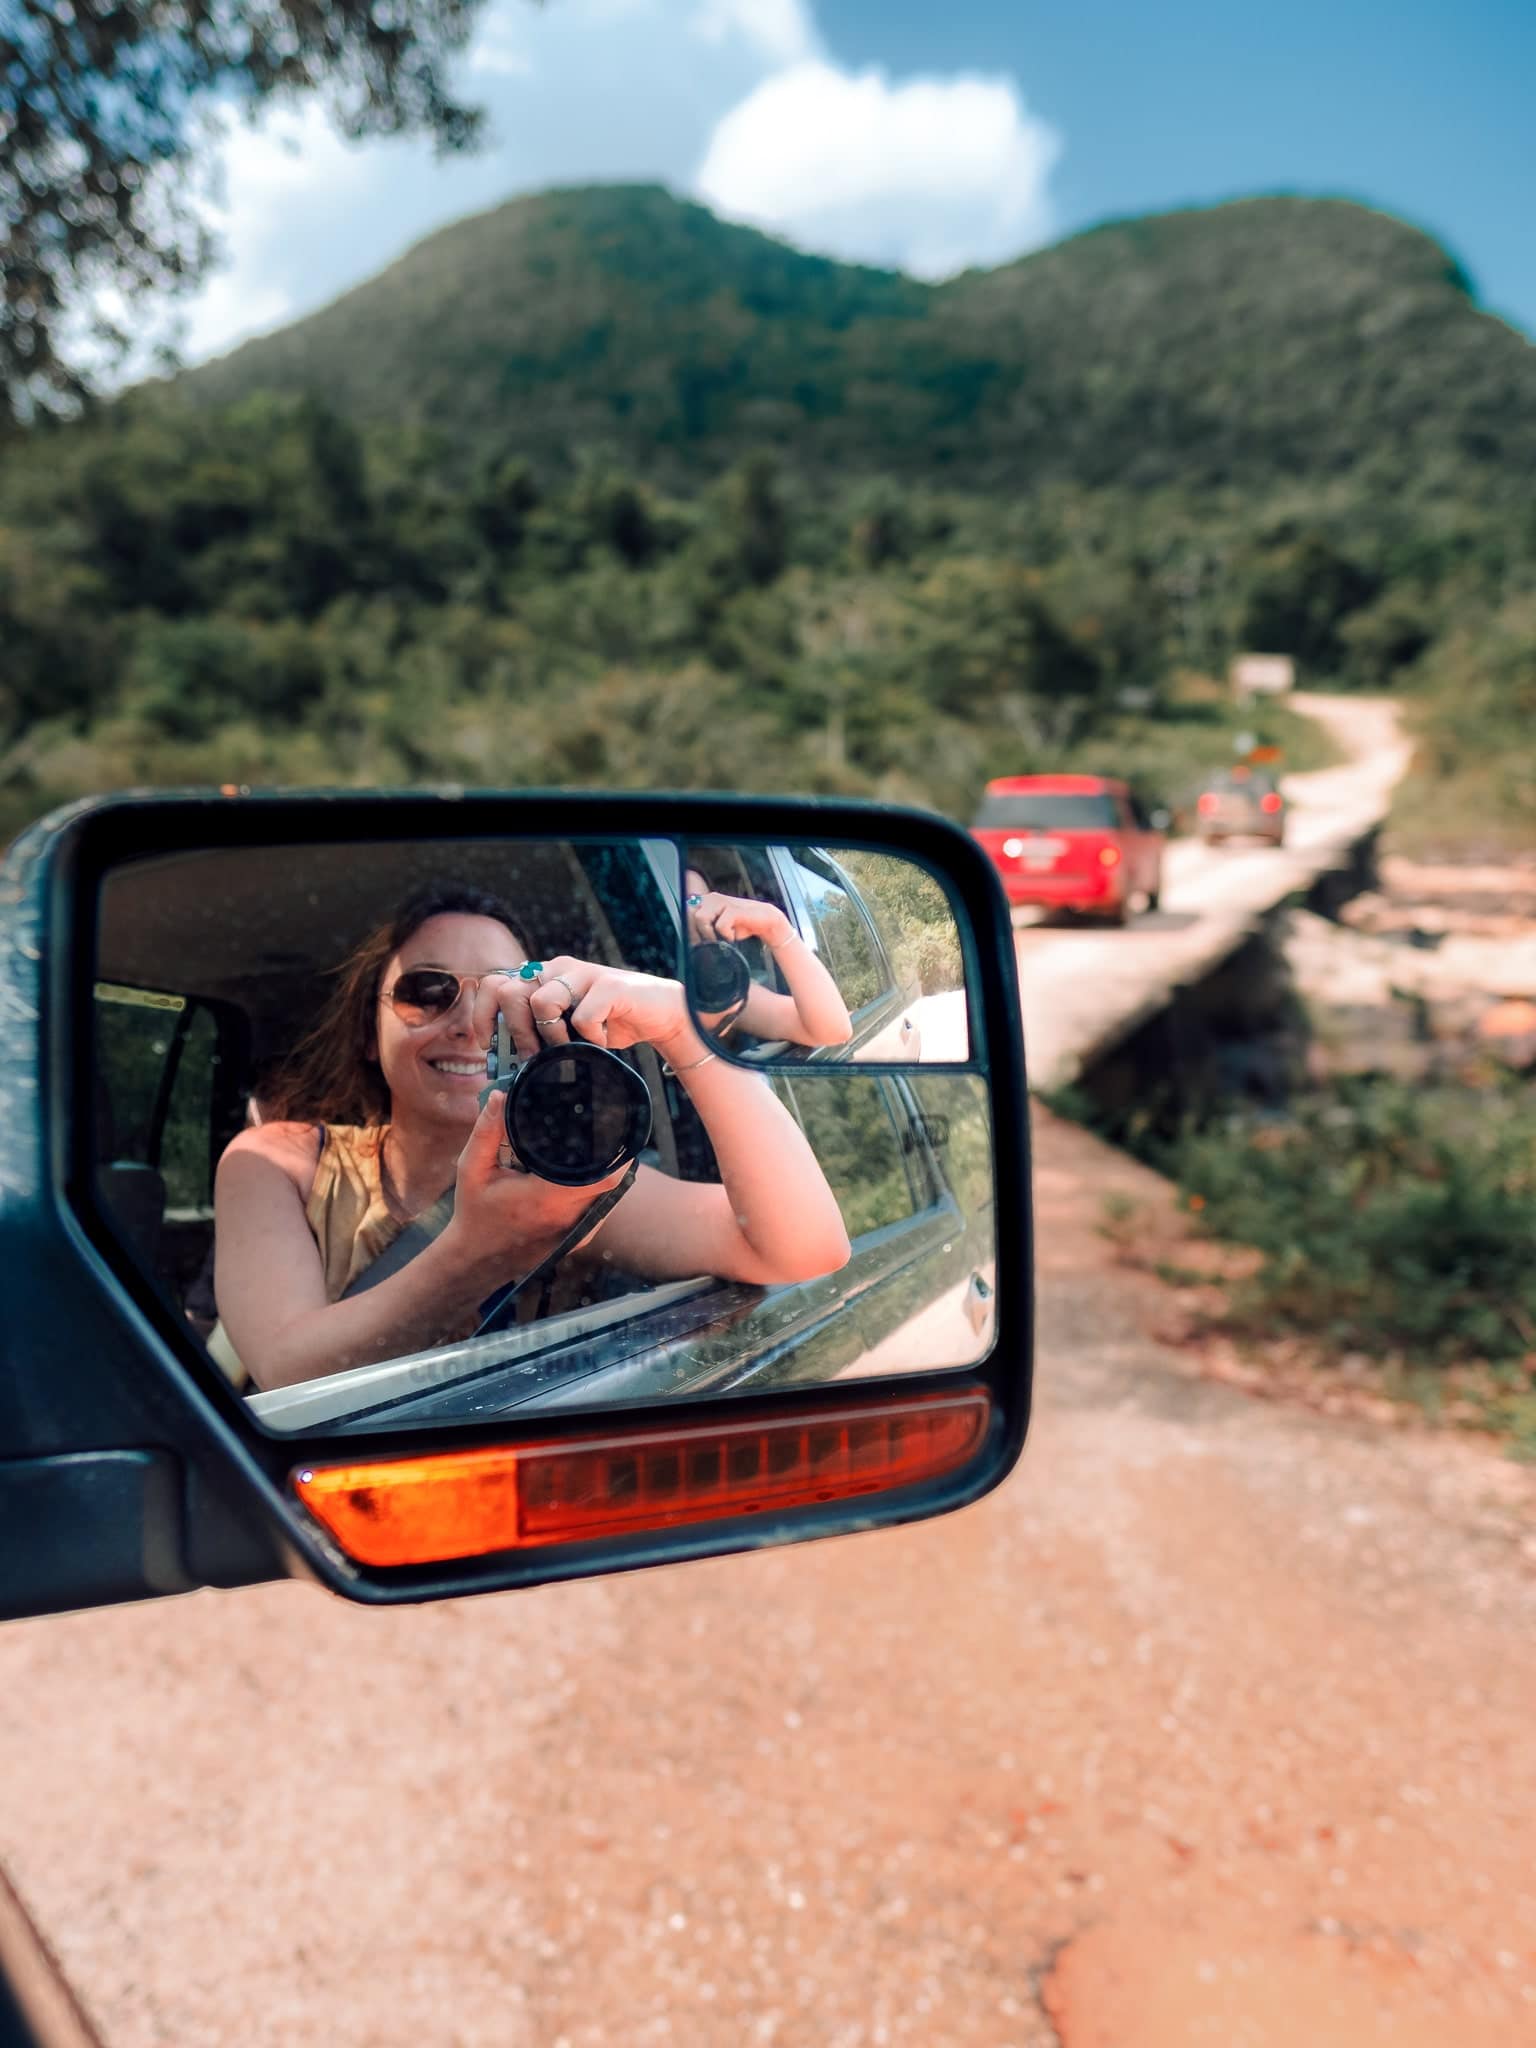 Mirror selfie in a rental car on a road trip through Belize